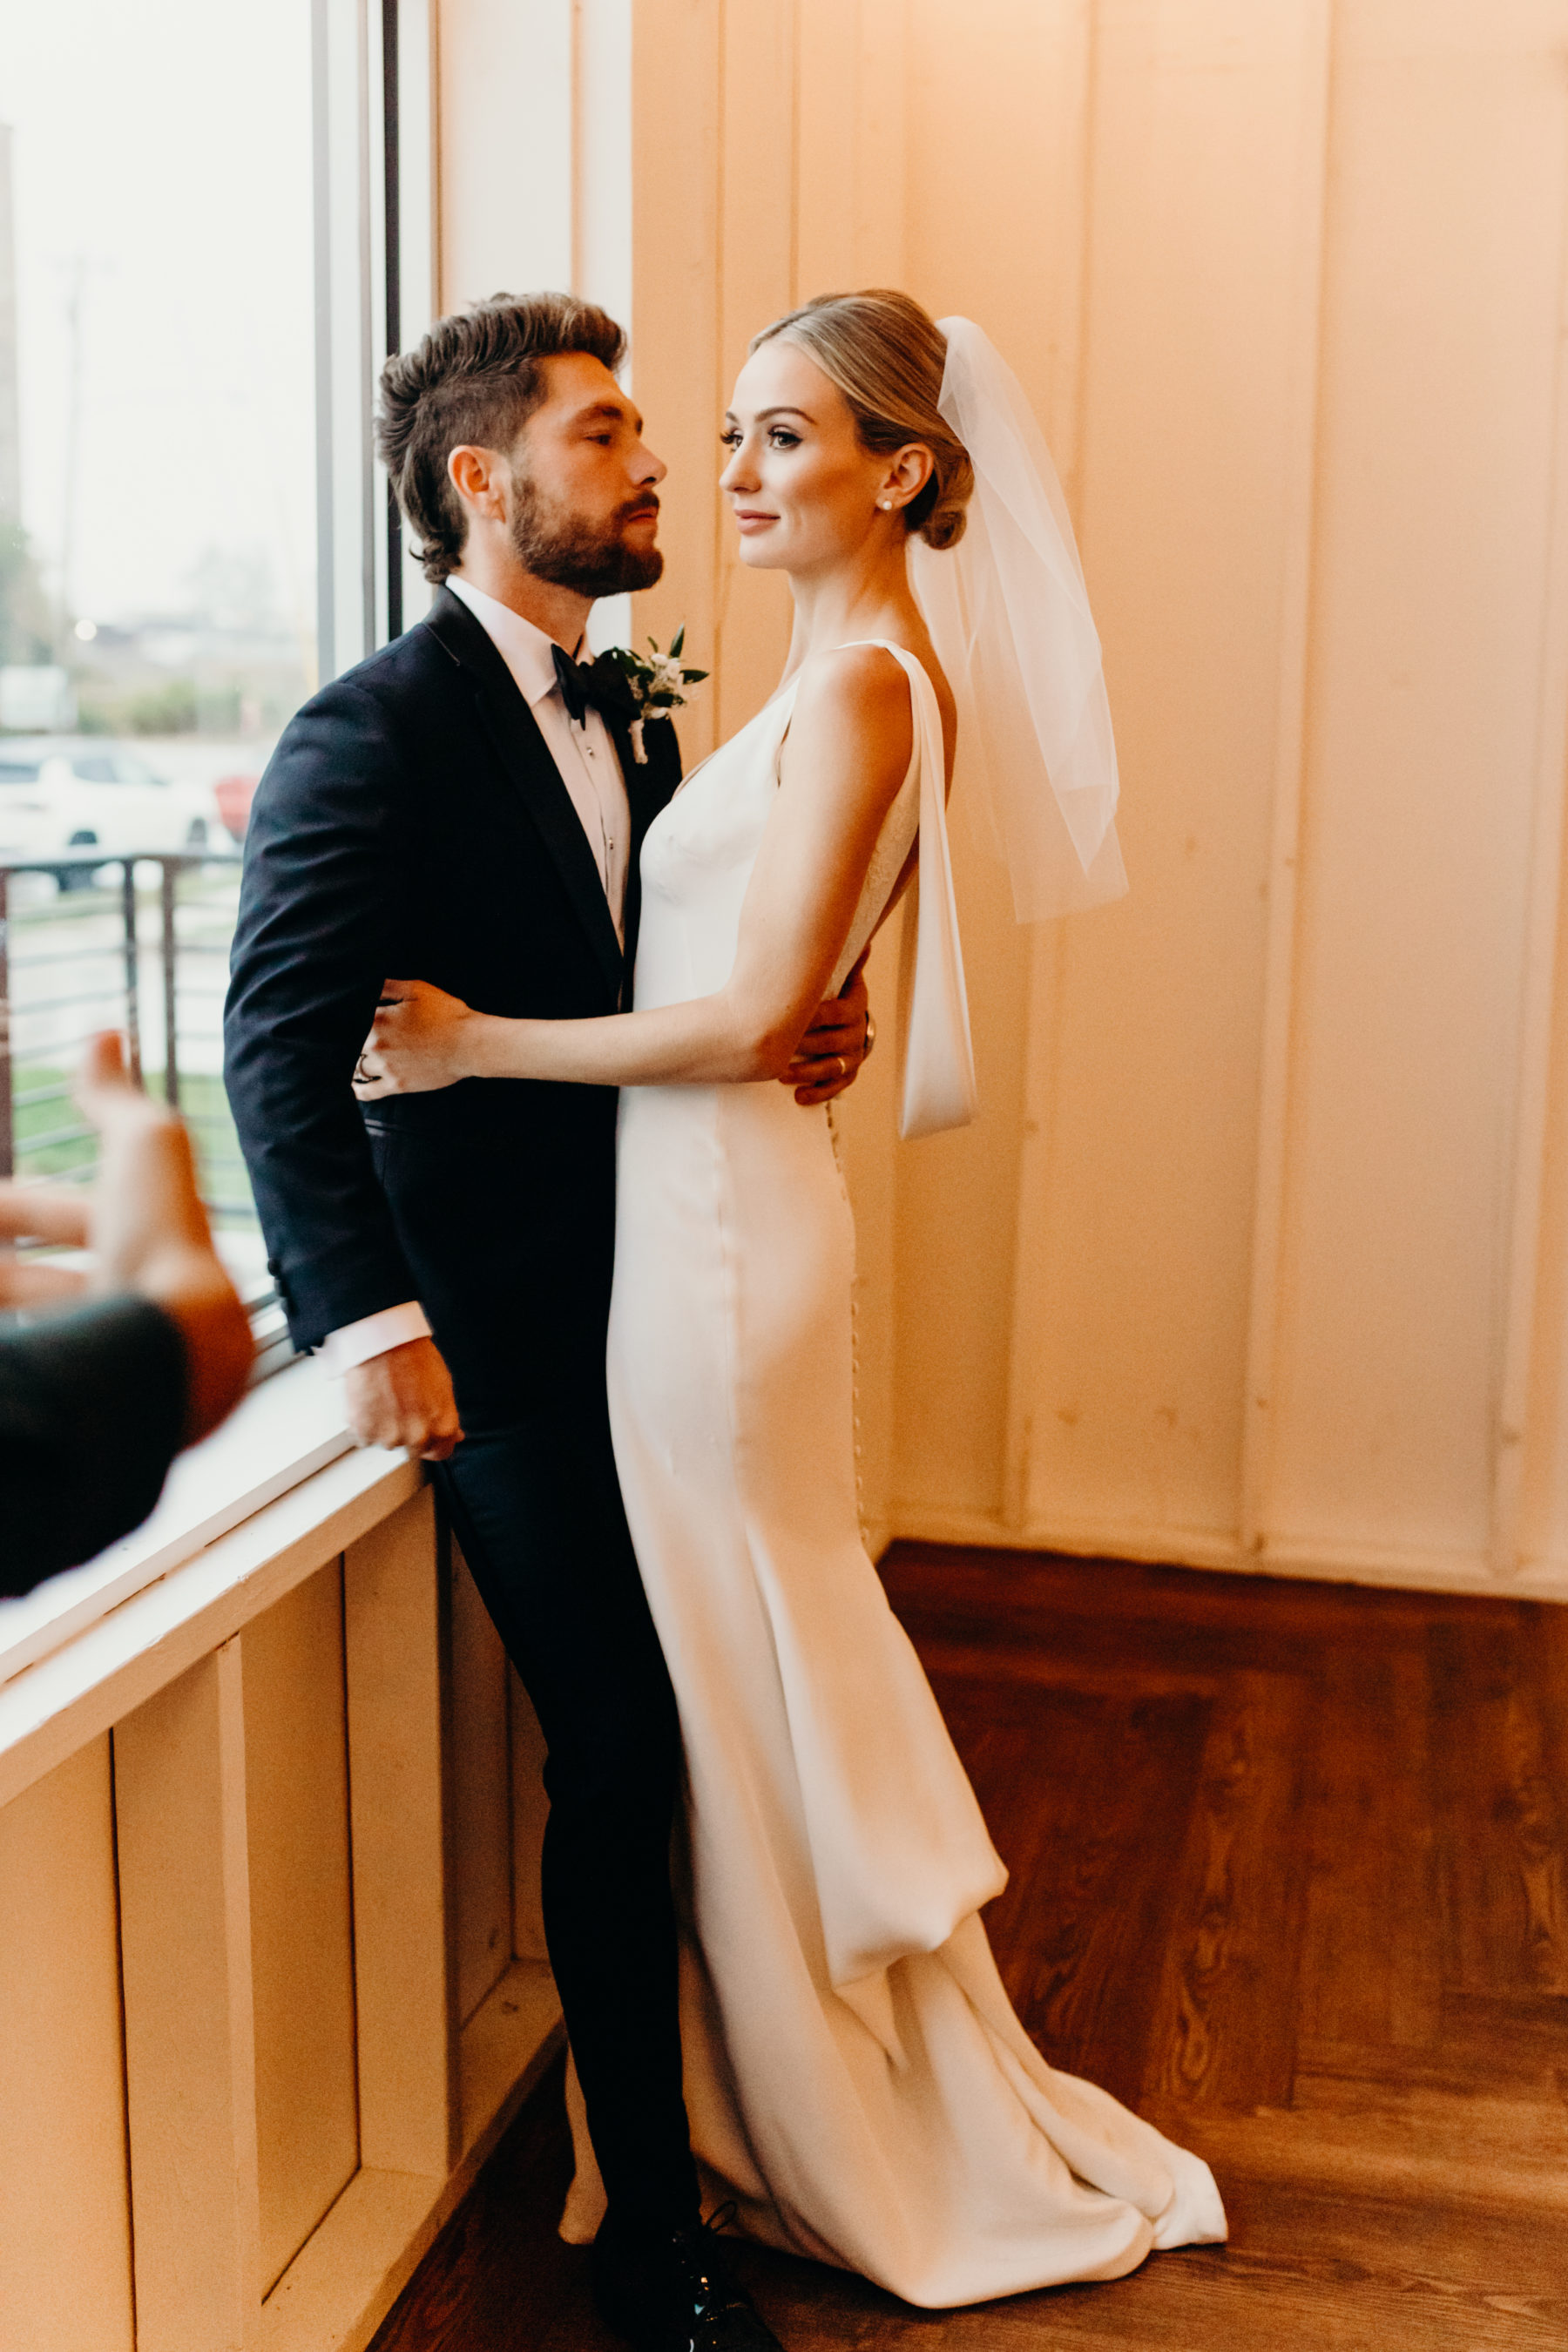 Lauren Bushnell and Chris Lane Nashville Wedding captured by Victoria Bonvinci